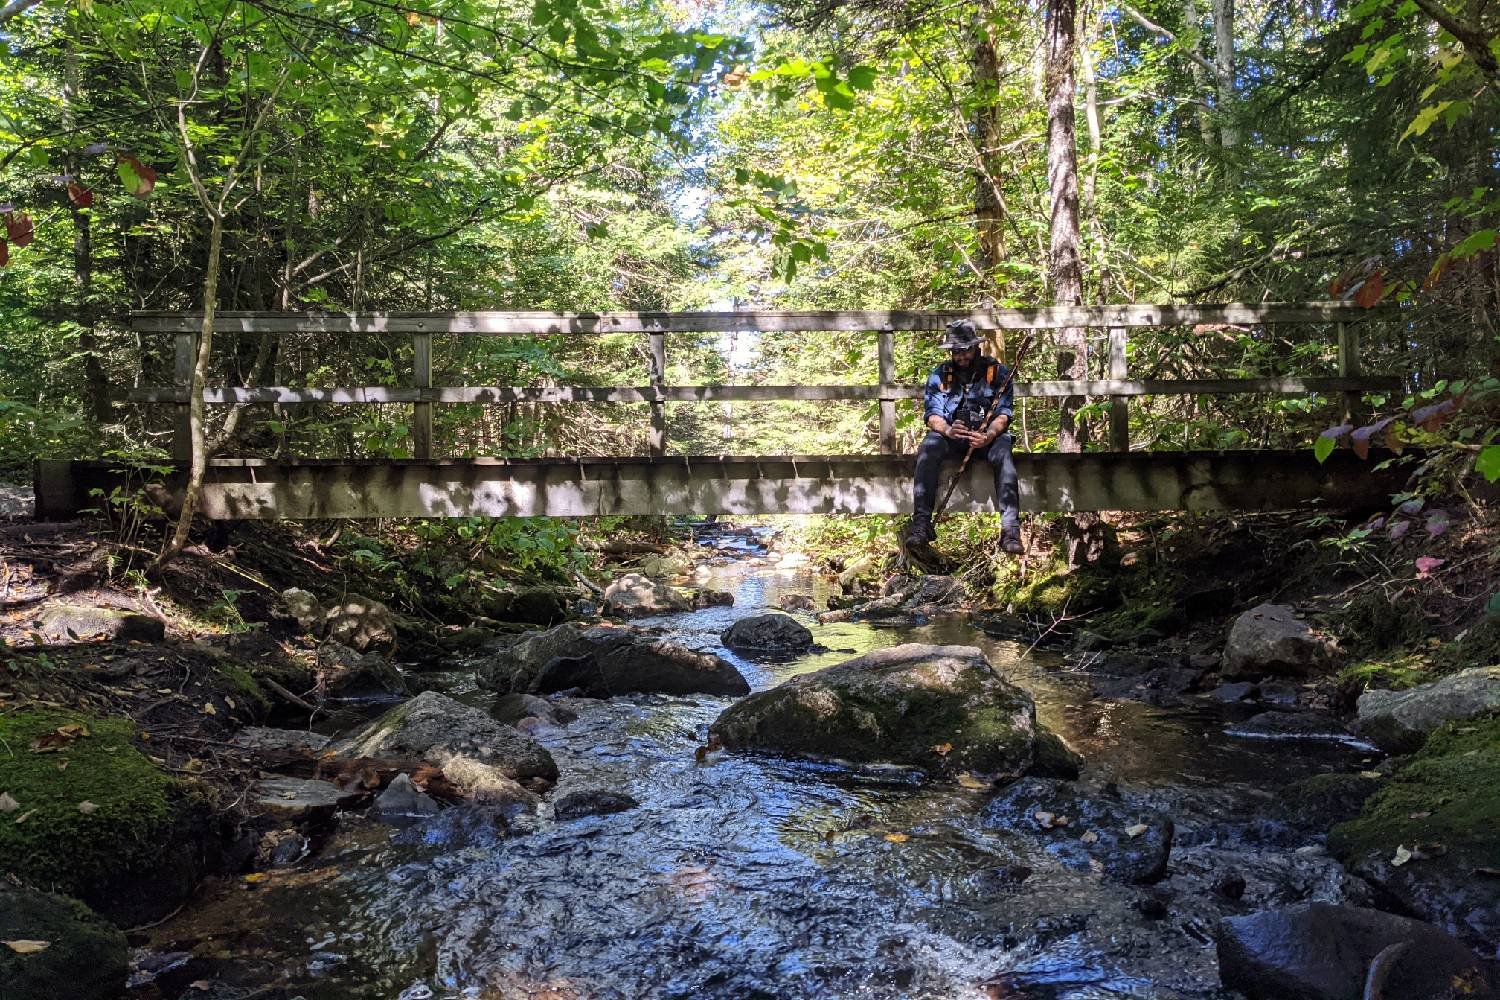 A Long Trail hiker sitting on a bridge over a stream